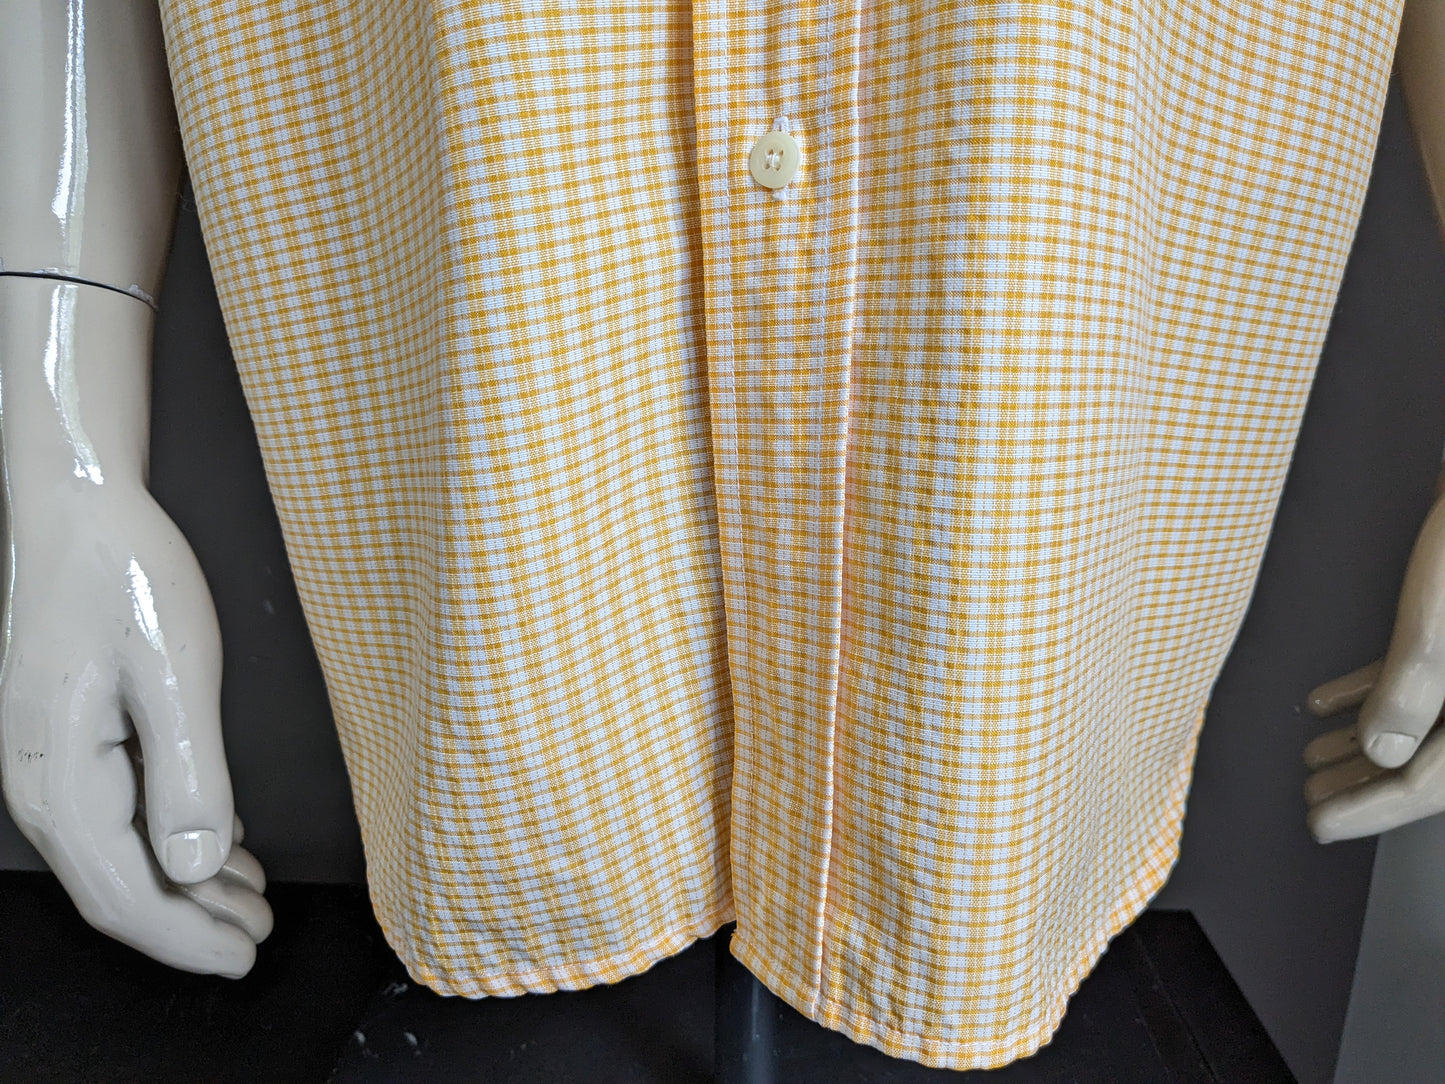 Camisa de club casual vintage manga corta. Motivo de color beige naranja. Tamaño XL / XXL-2XL.